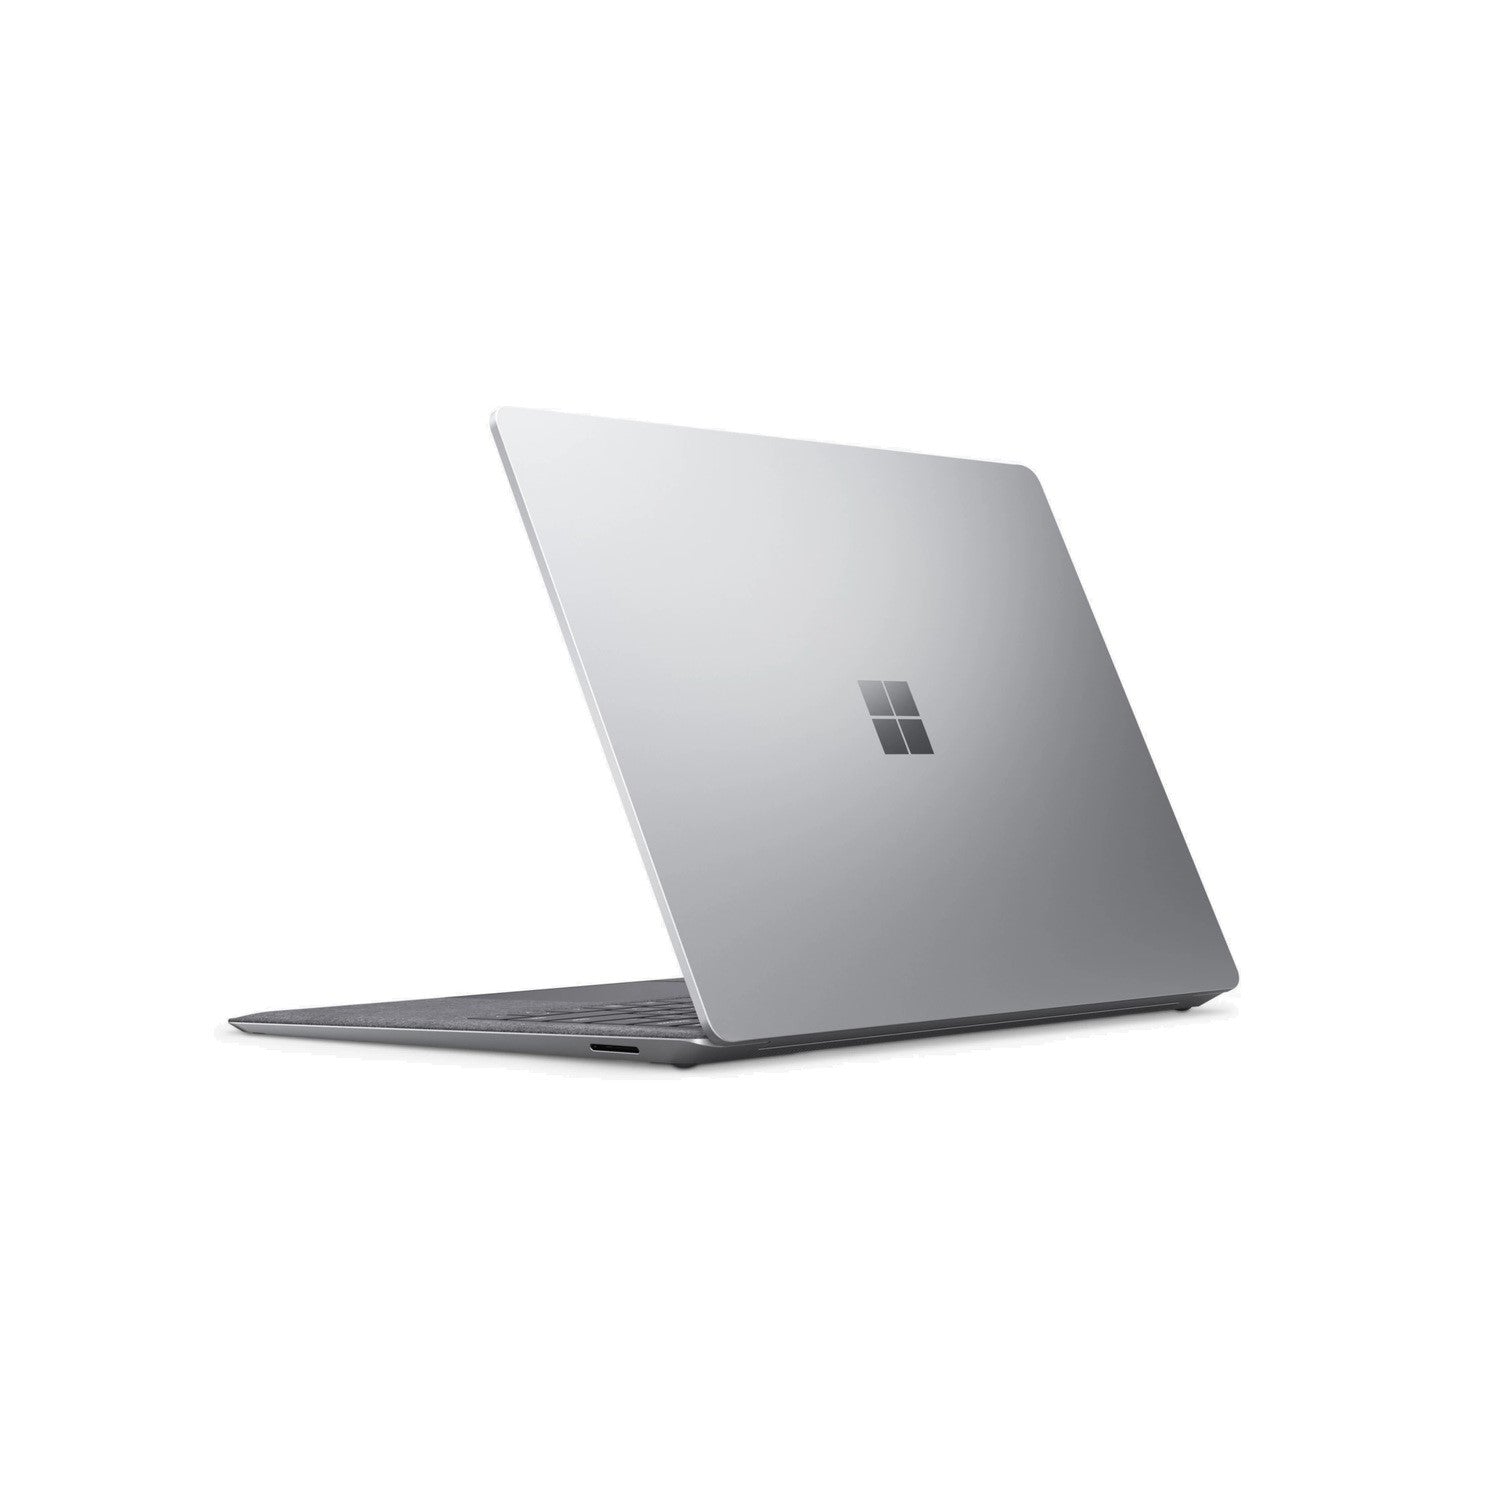 Microsoft Surface Laptop 4, AMD Ryzen 5 8GB RAM 256GB SSD 13.5" Grey - Refurbished Pristine